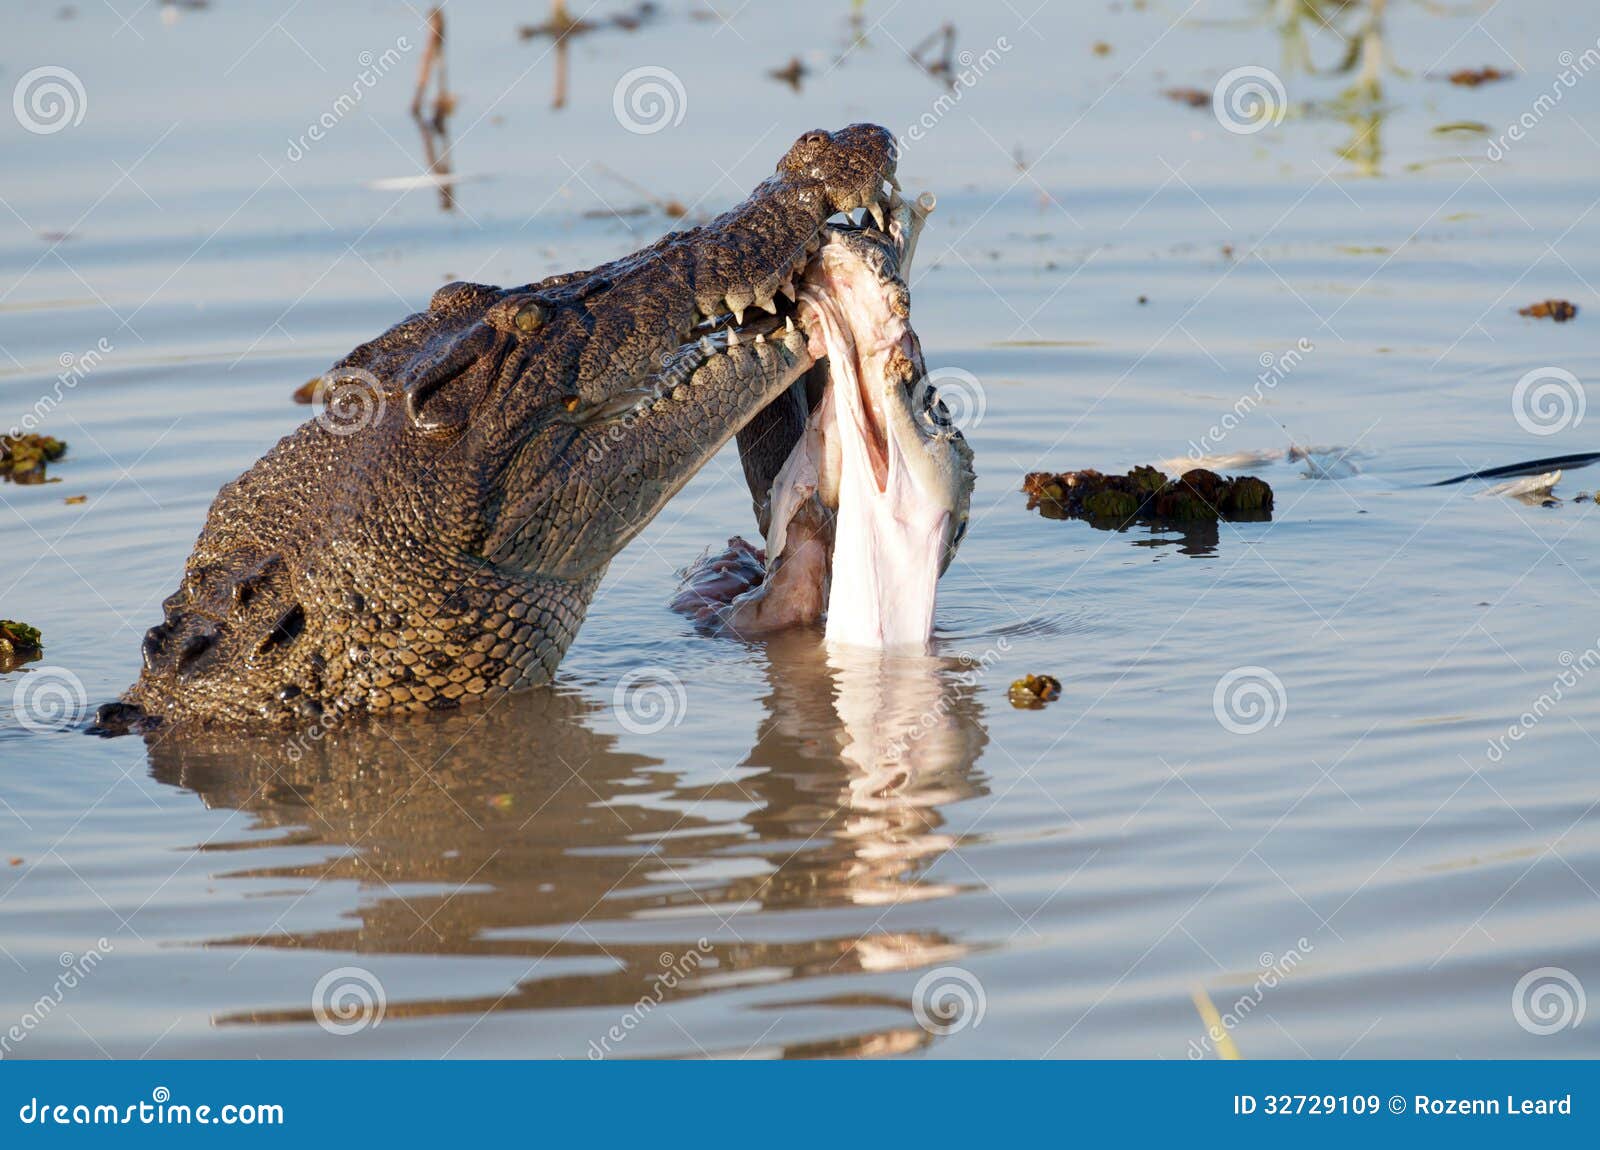 Crocodile eating prey stock image. Image of scary ...